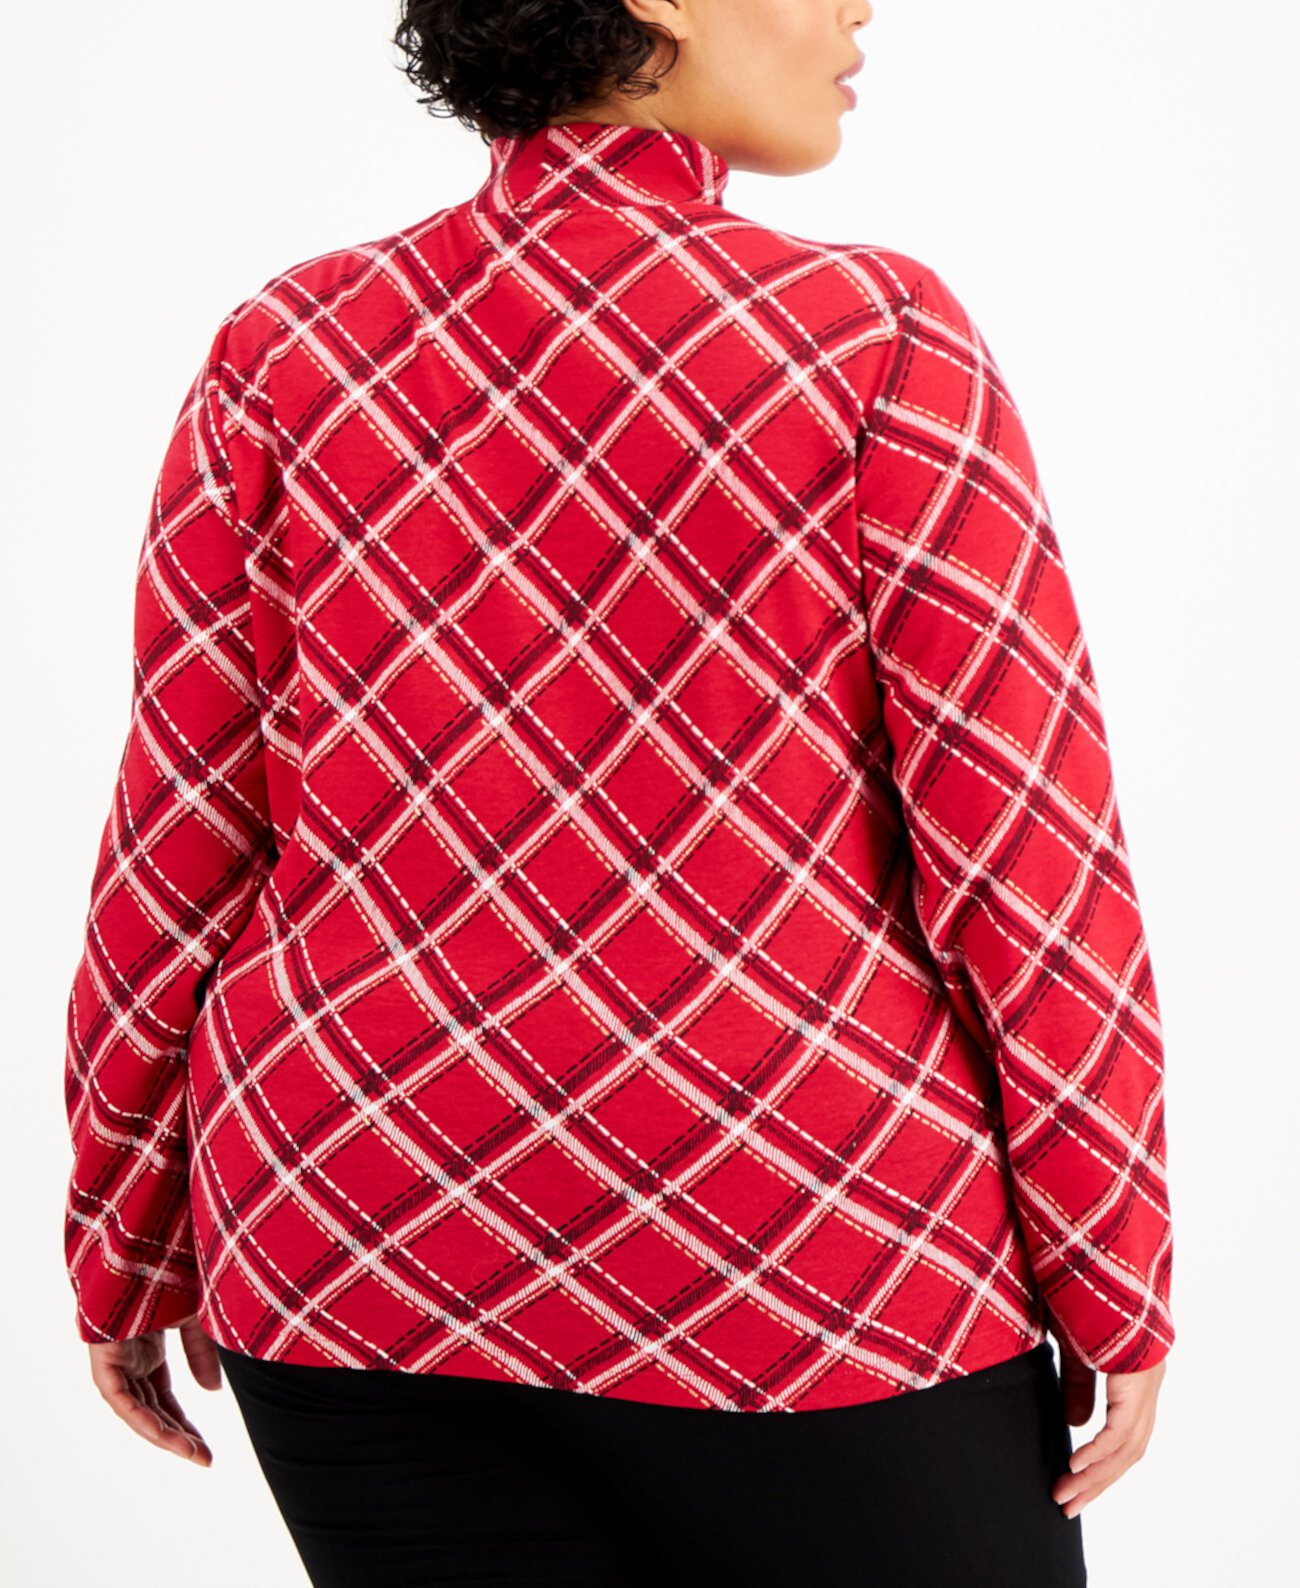 Plus Size Plaid Mock-Neck Top, Created for Macy's Karen Scott